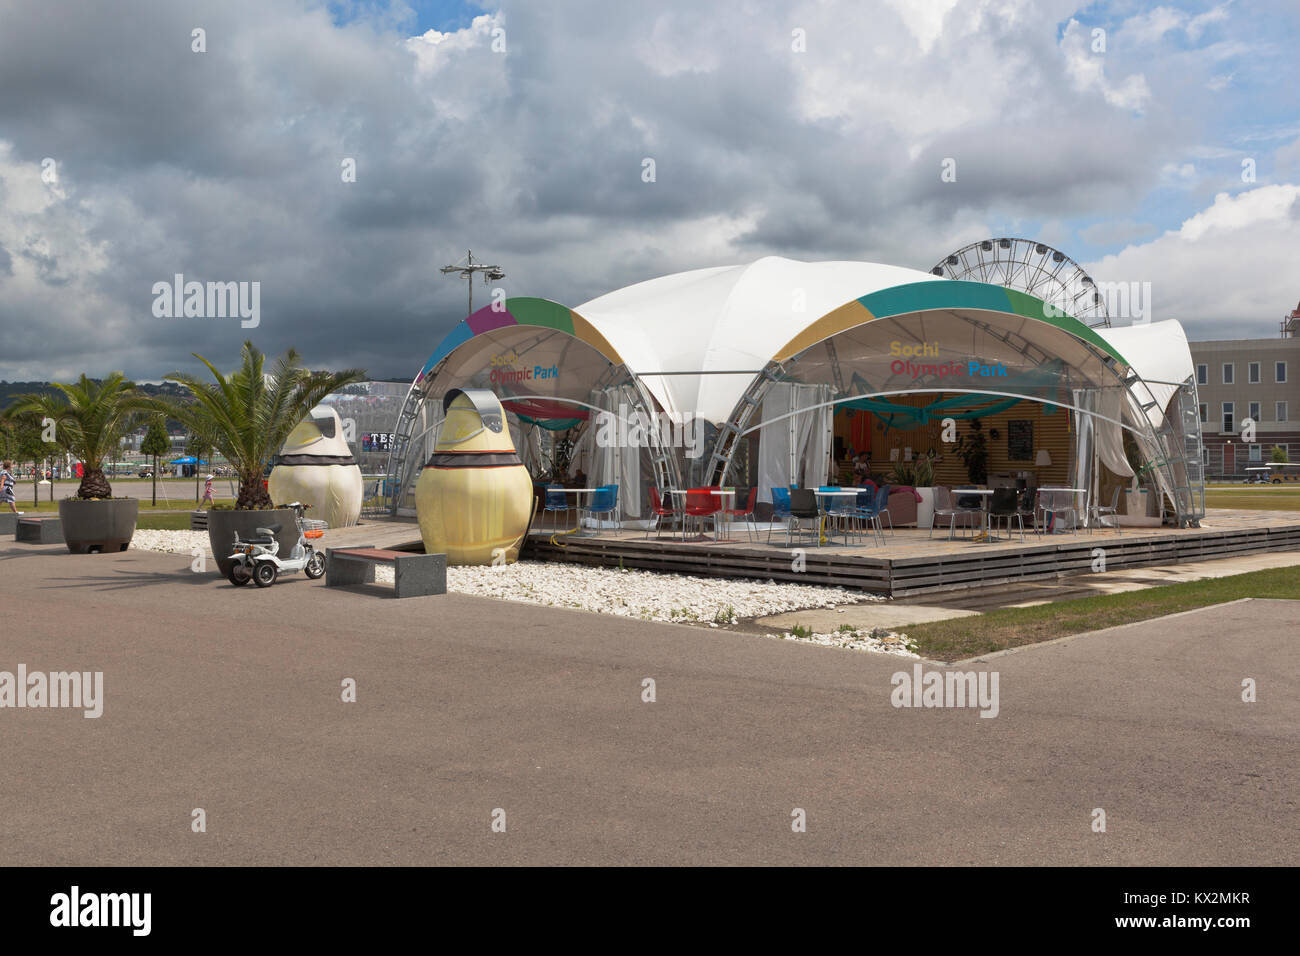 Adler, Krasnodar region, Russia - July 8, 2016: Cafe on the territory of the Sochi Olympic Park Stock Photo